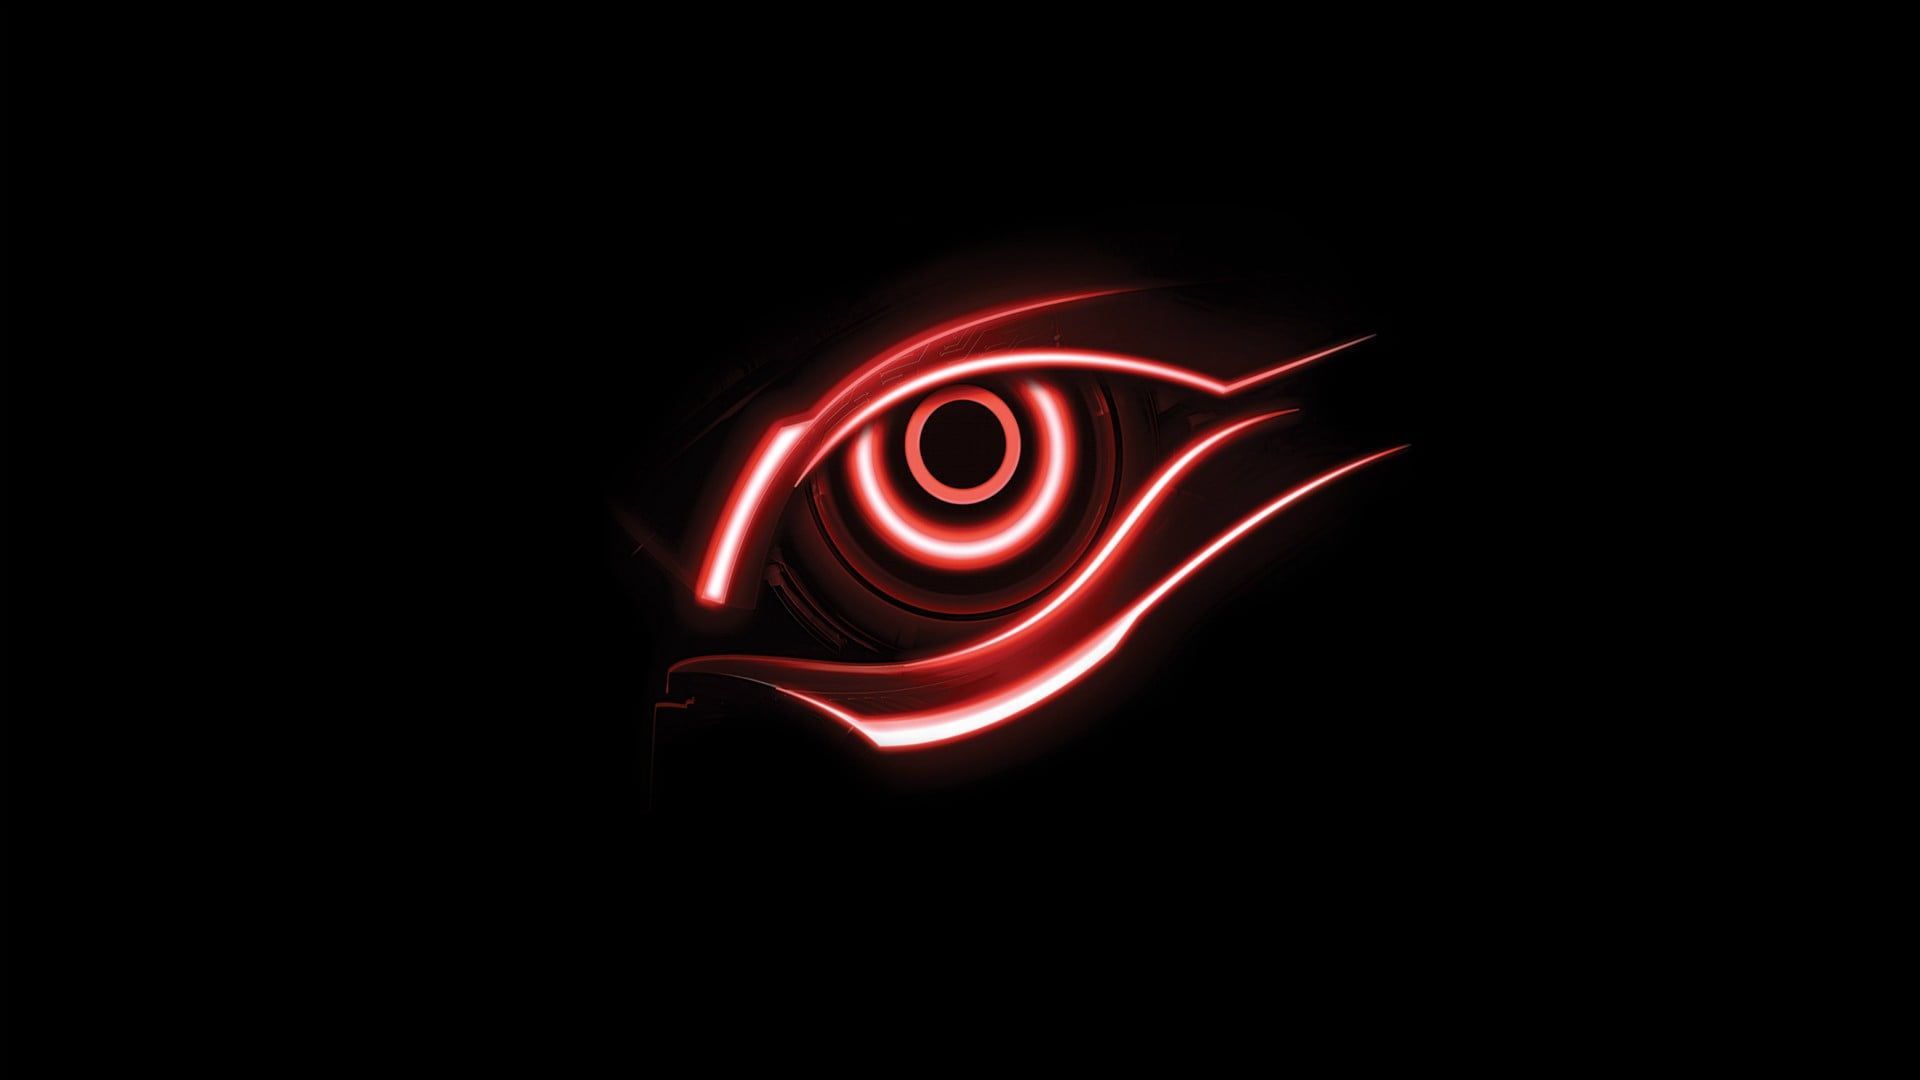 Red halo headlight wallpaper, eye illustration, eyes, black background. Eyes wallpaper, Eye illustration, Red and black wallpaper